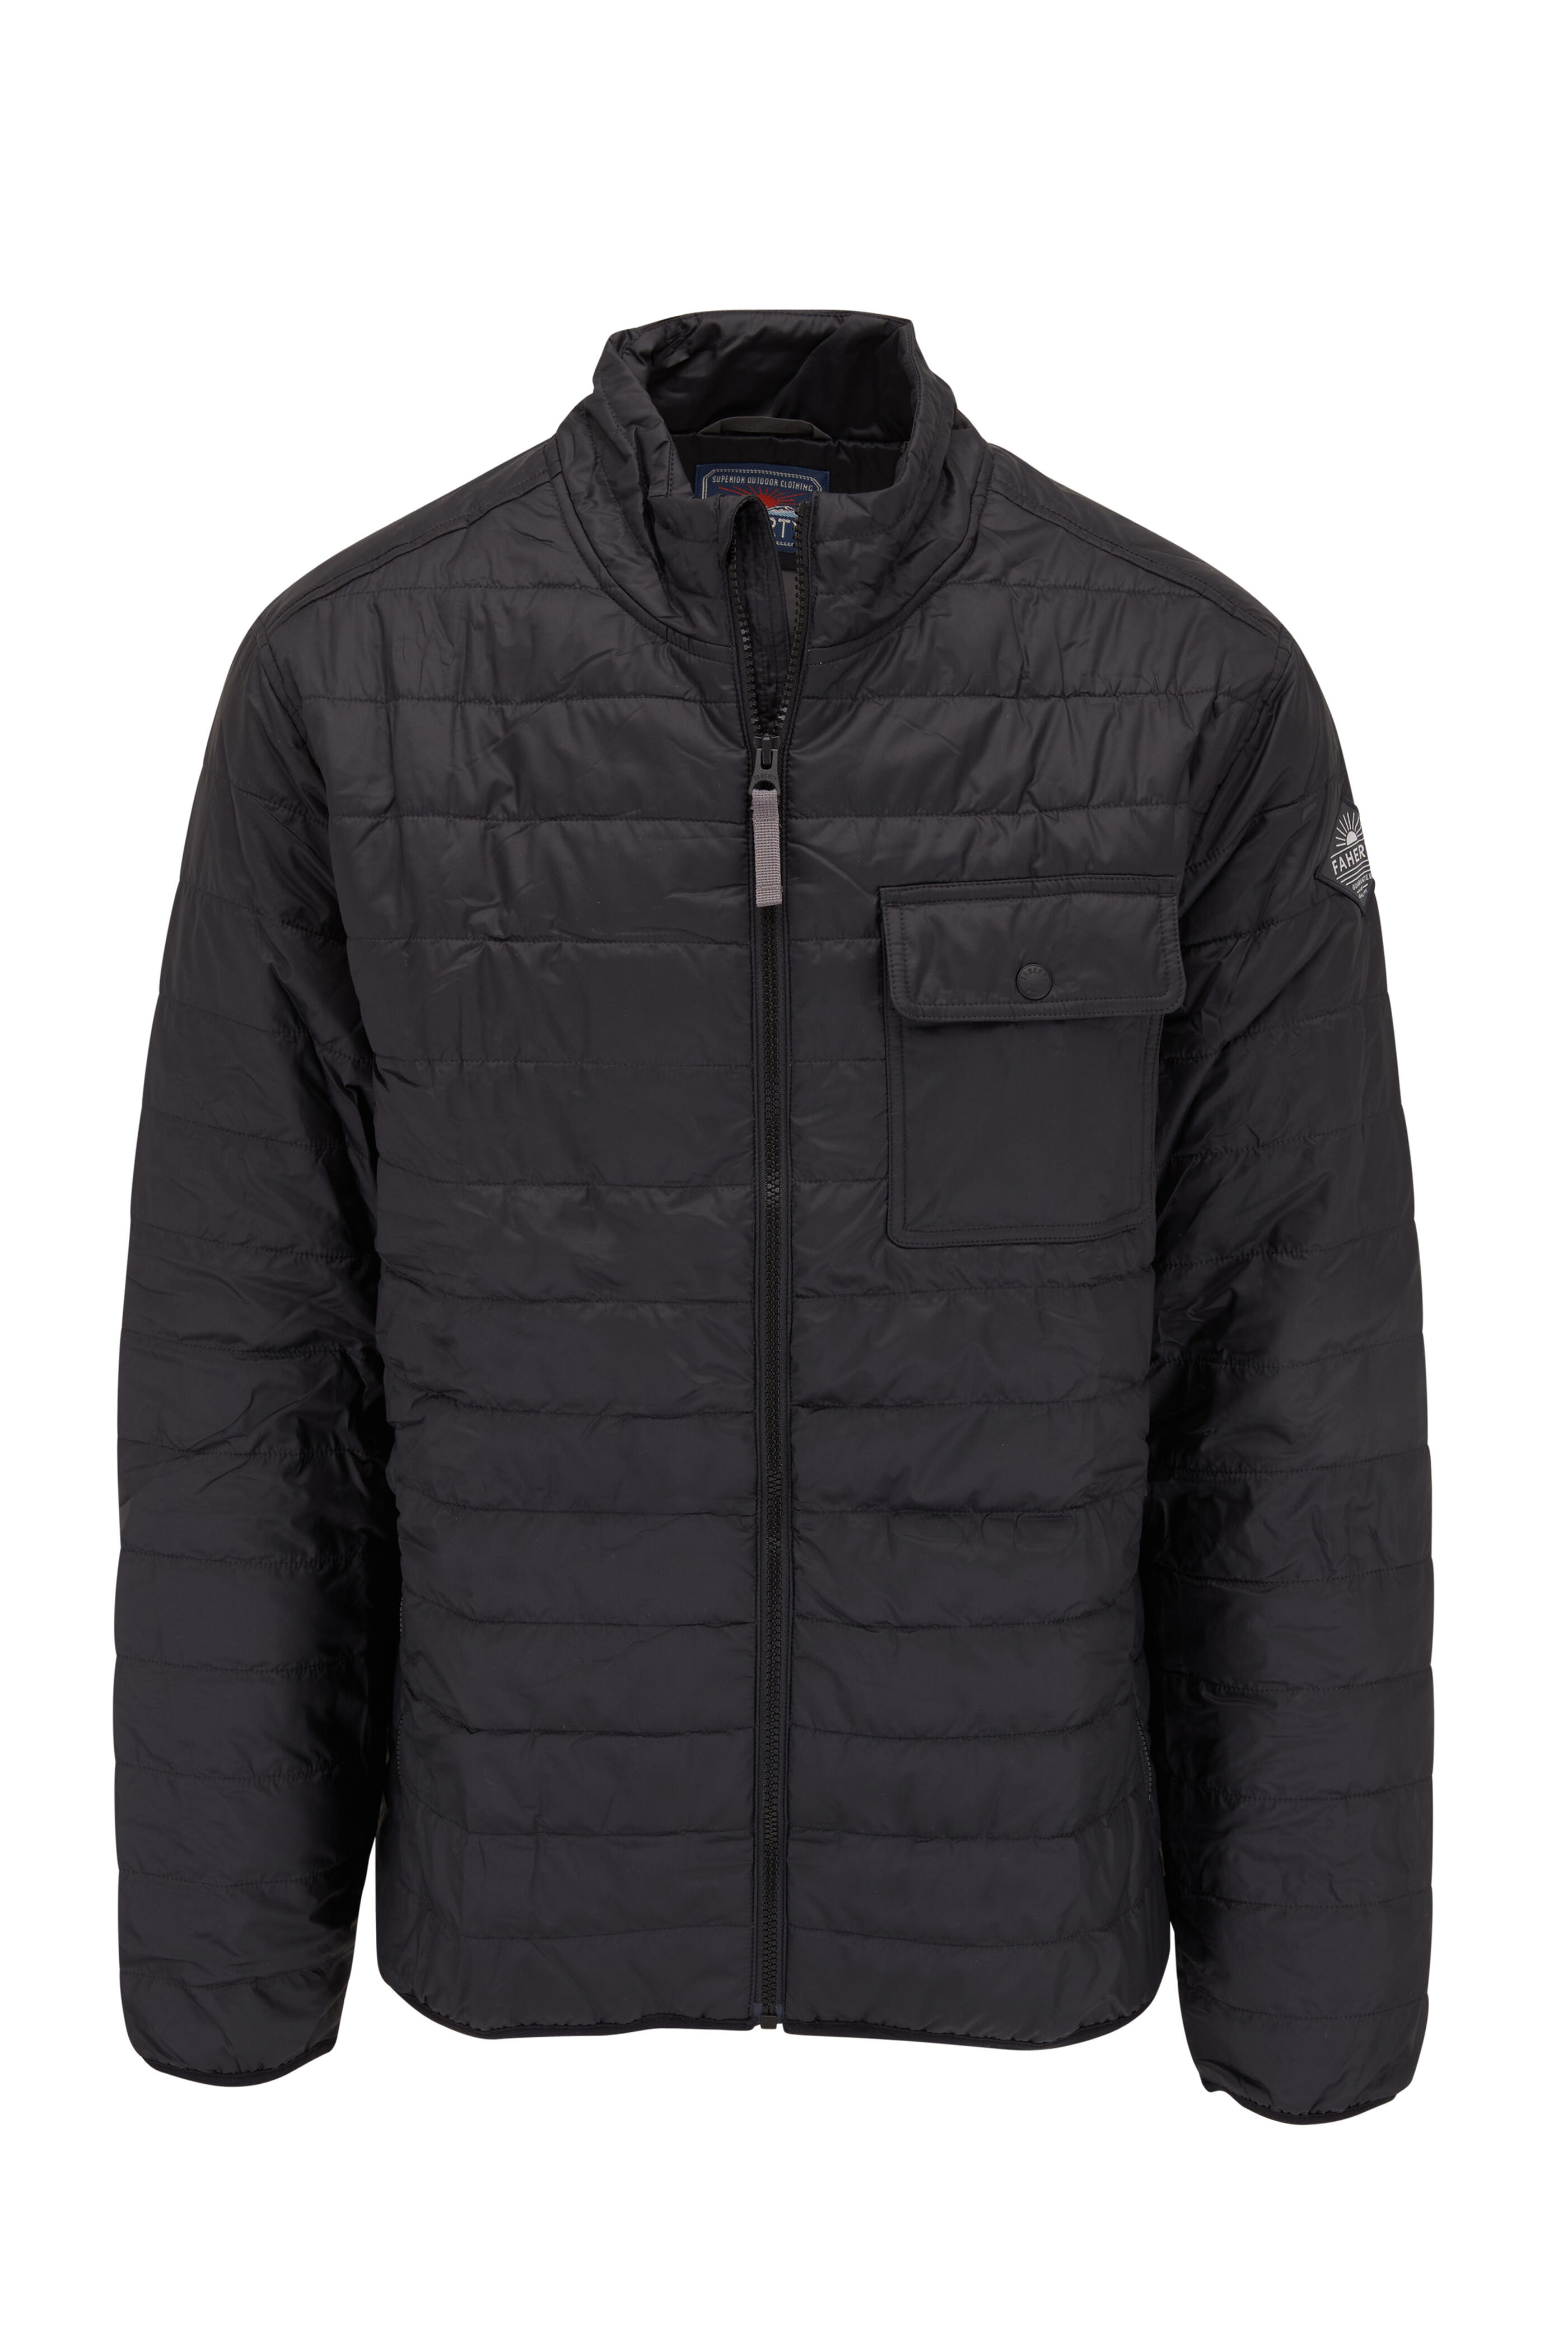 Faherty Brand - Atmosphere Mountain Black Full Zip Jacket